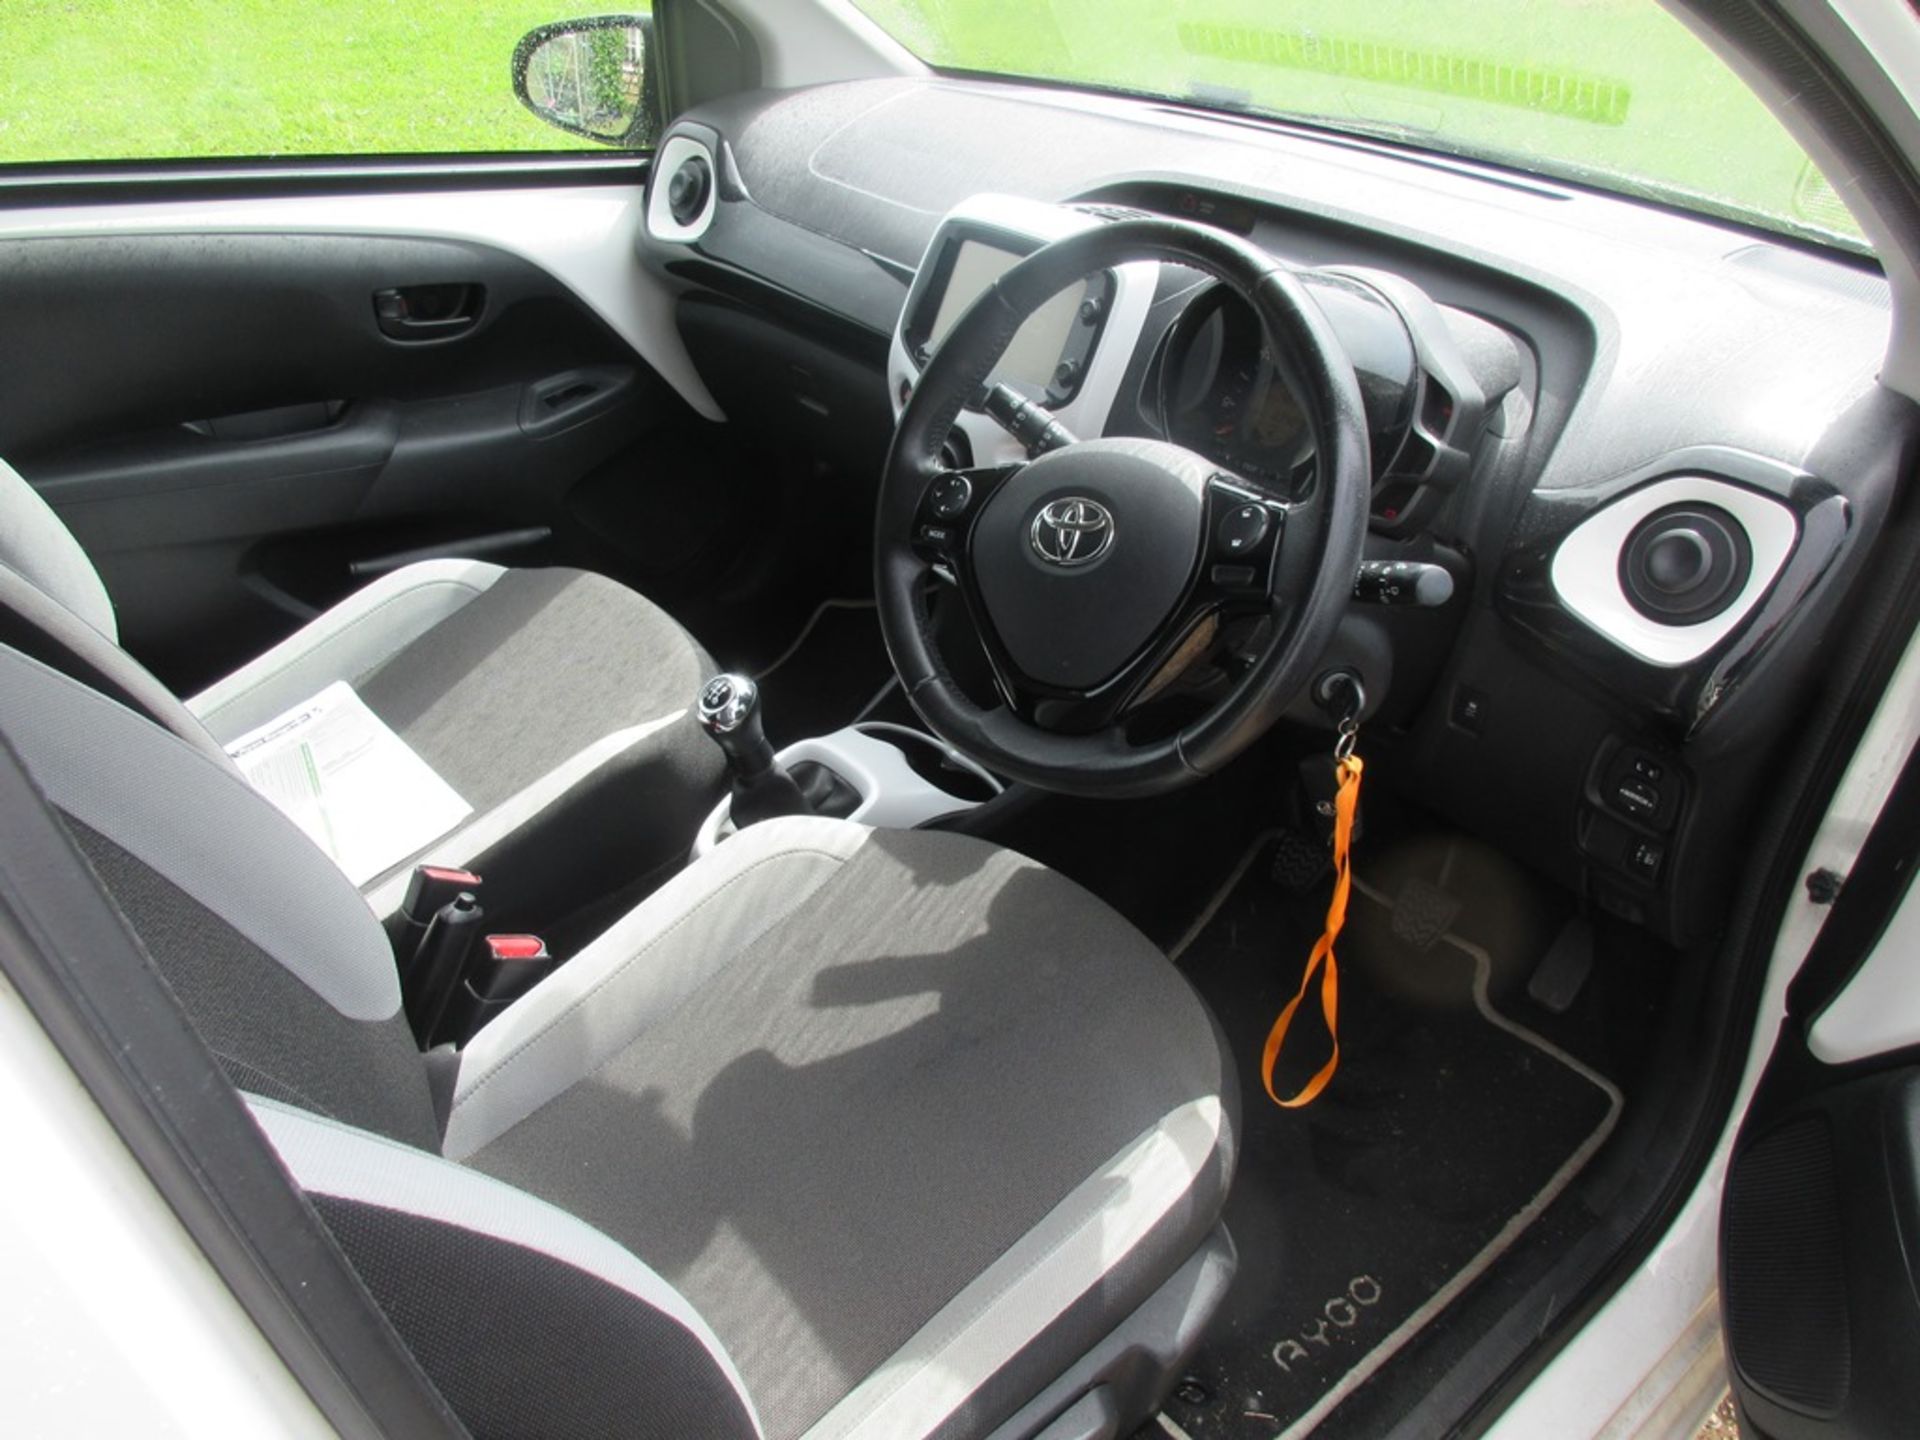 Toyota Aygo X-Pure Vvt-I Hatchback, 67bhp Registration: RO16 MVH Recorded mileage: 33,425 MOT: - Image 12 of 14